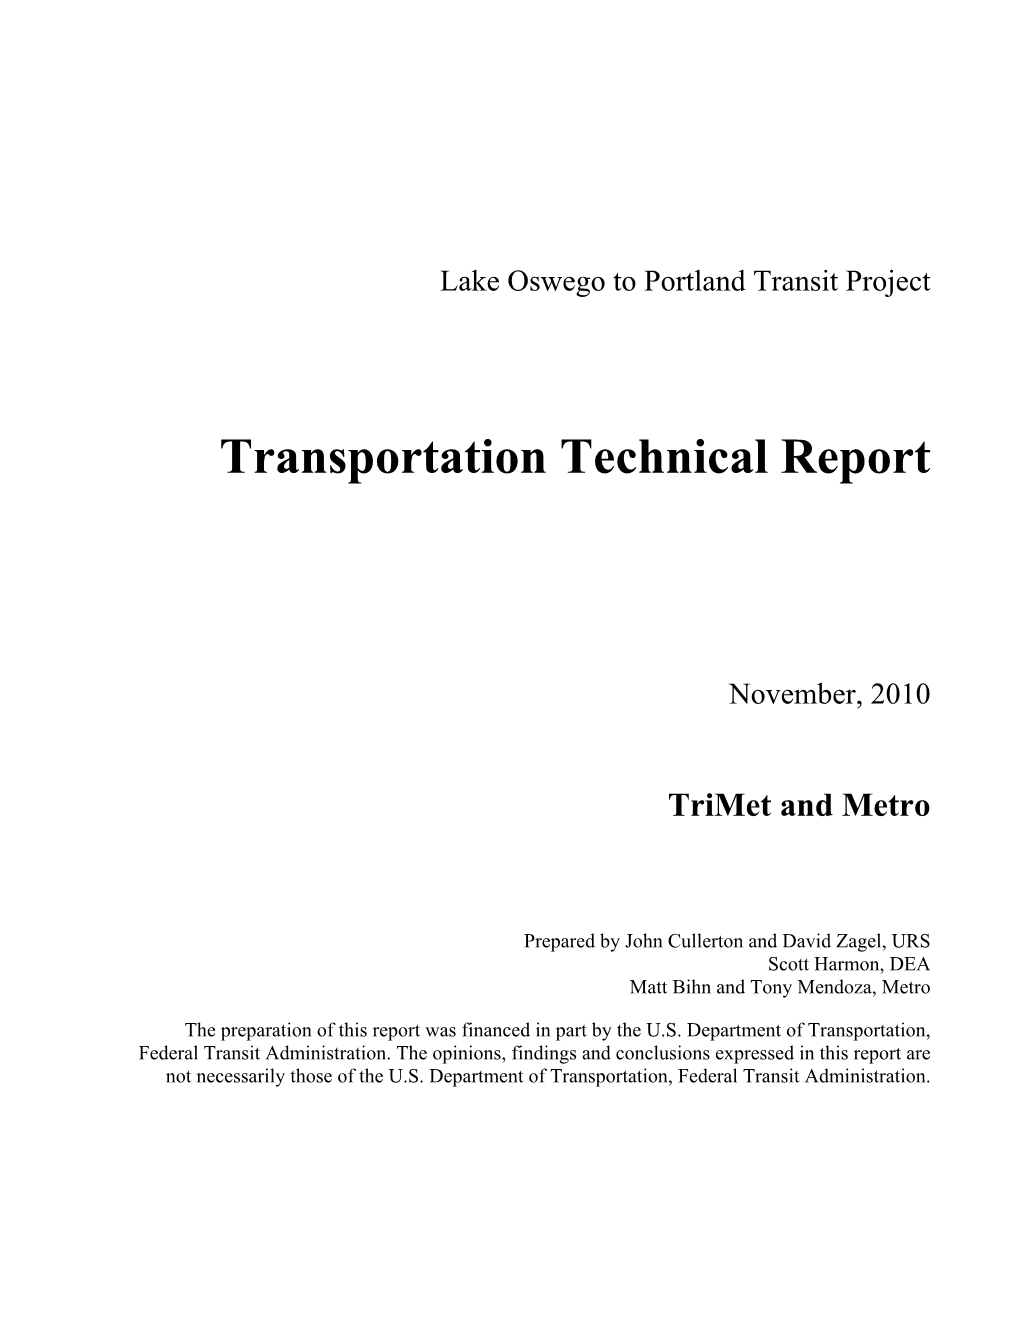 Transportation Technical Report